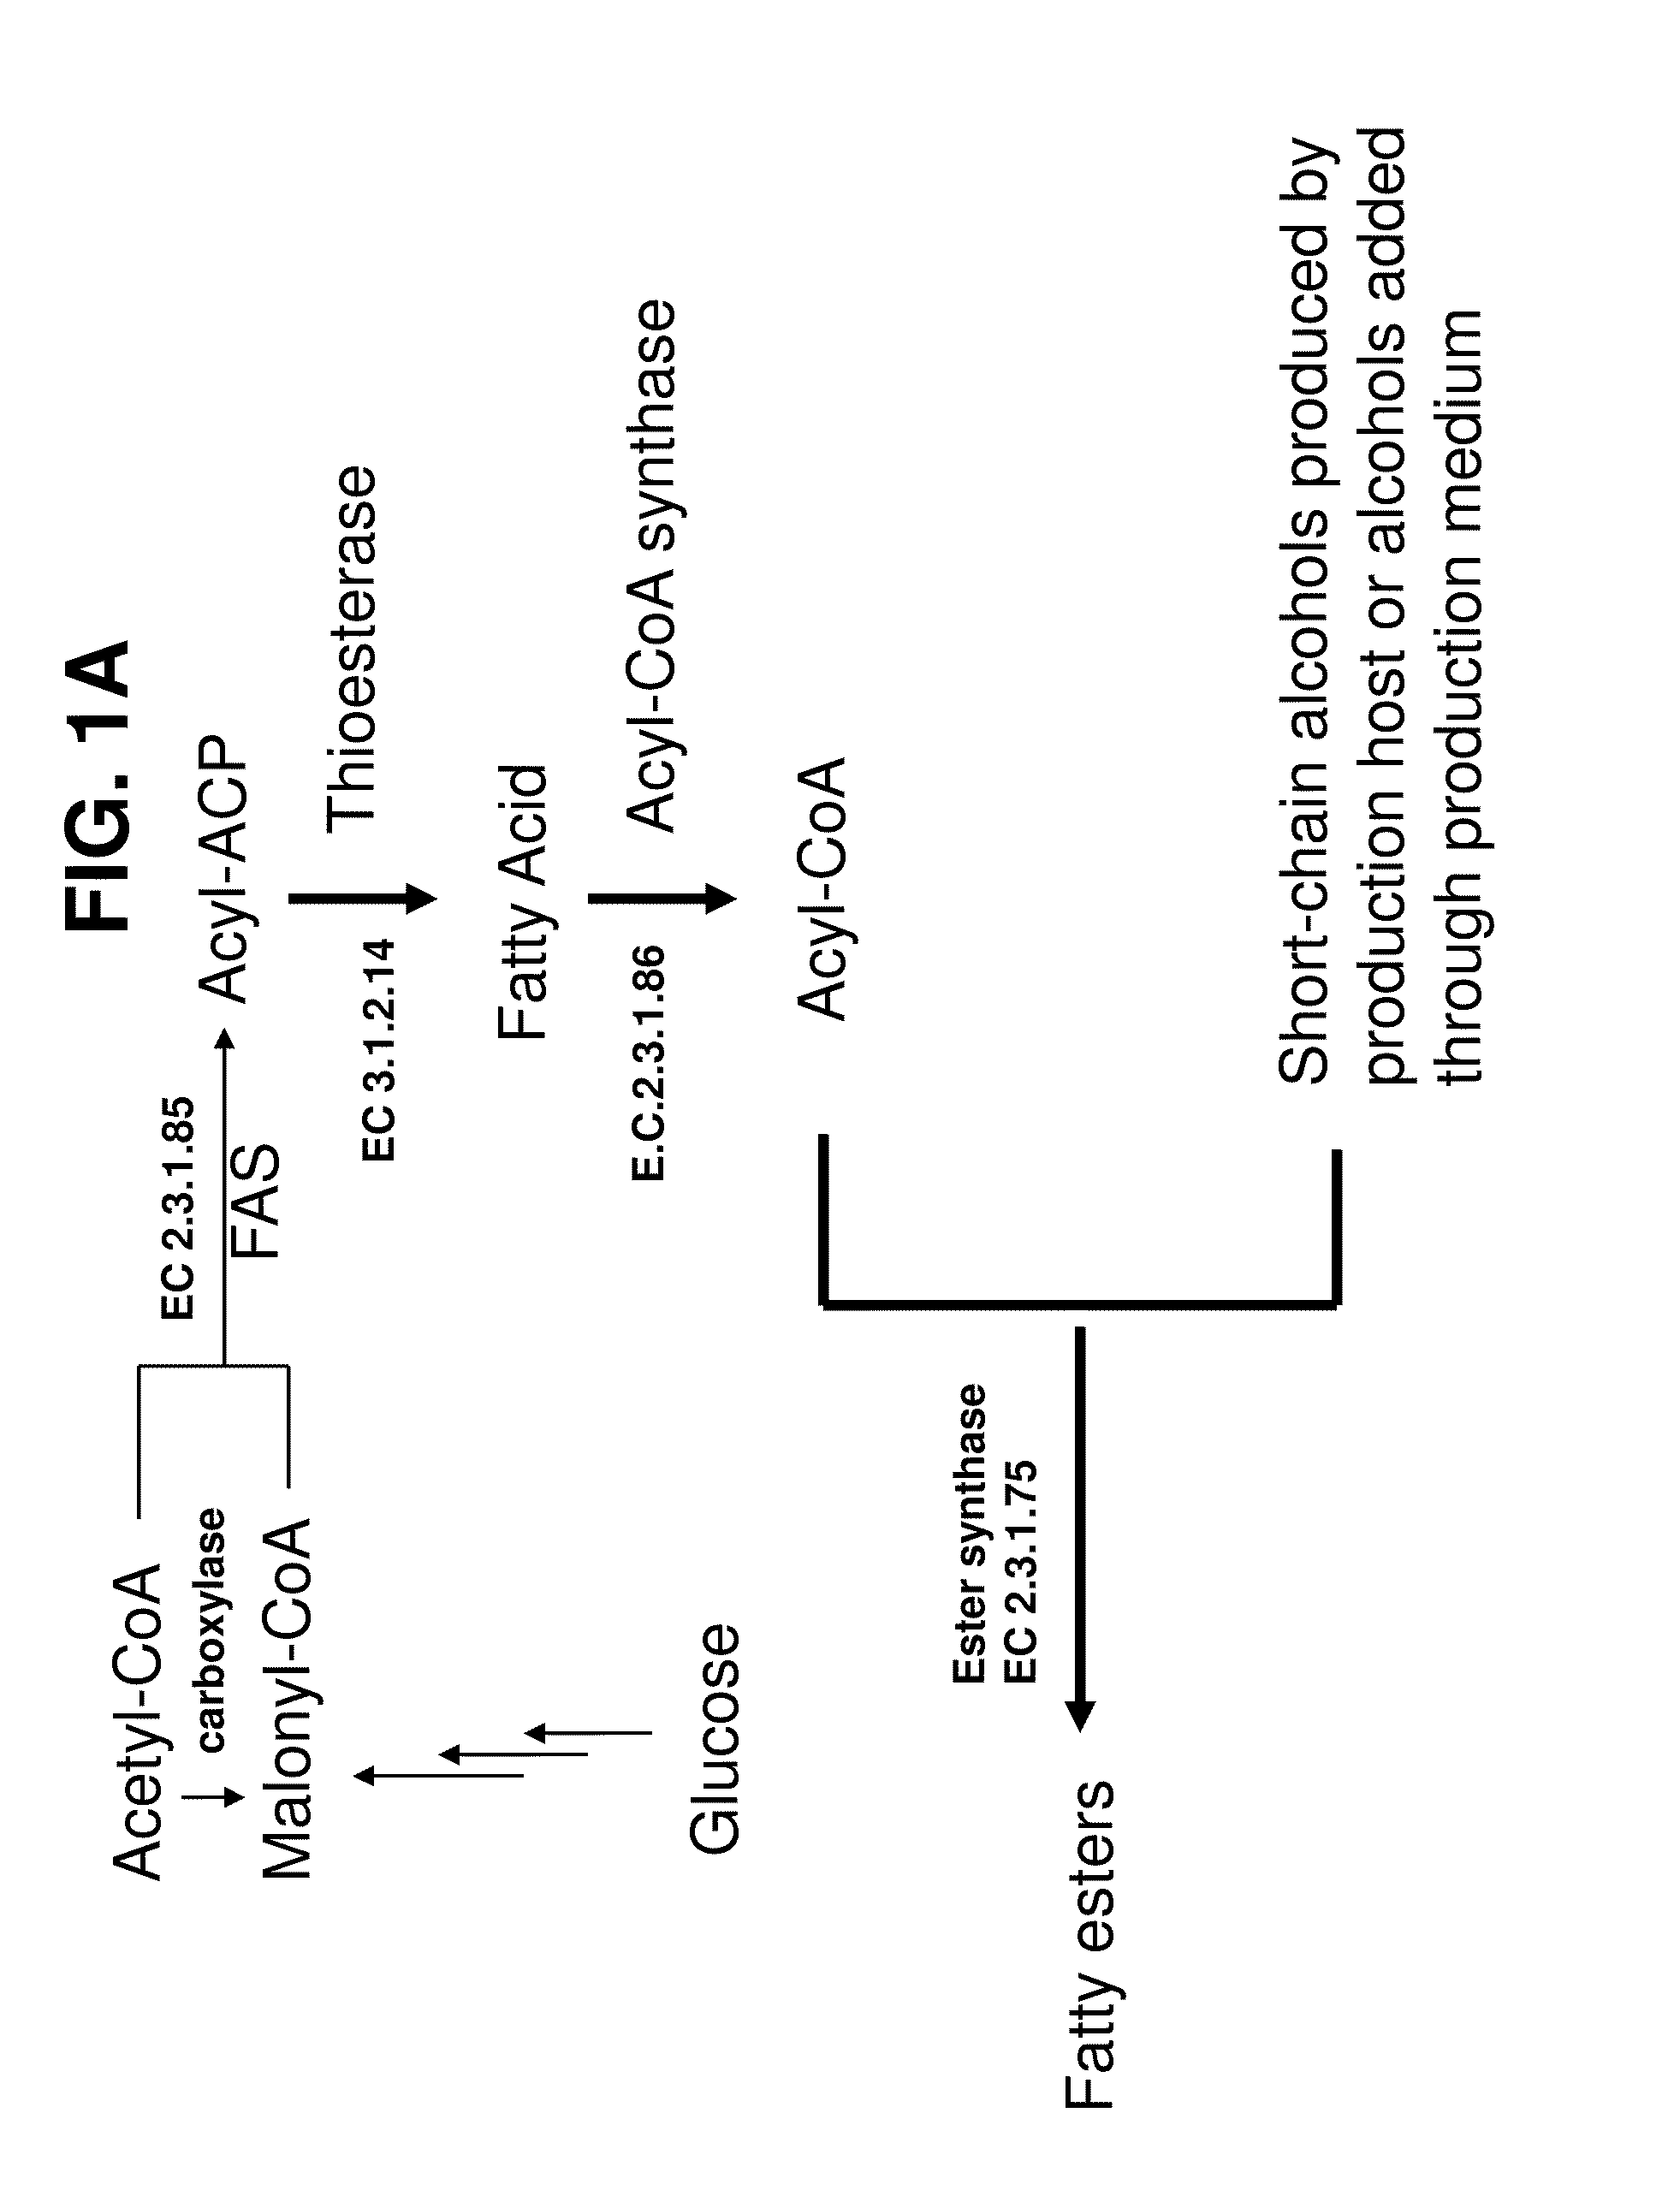 Production of fatty acid derivatives